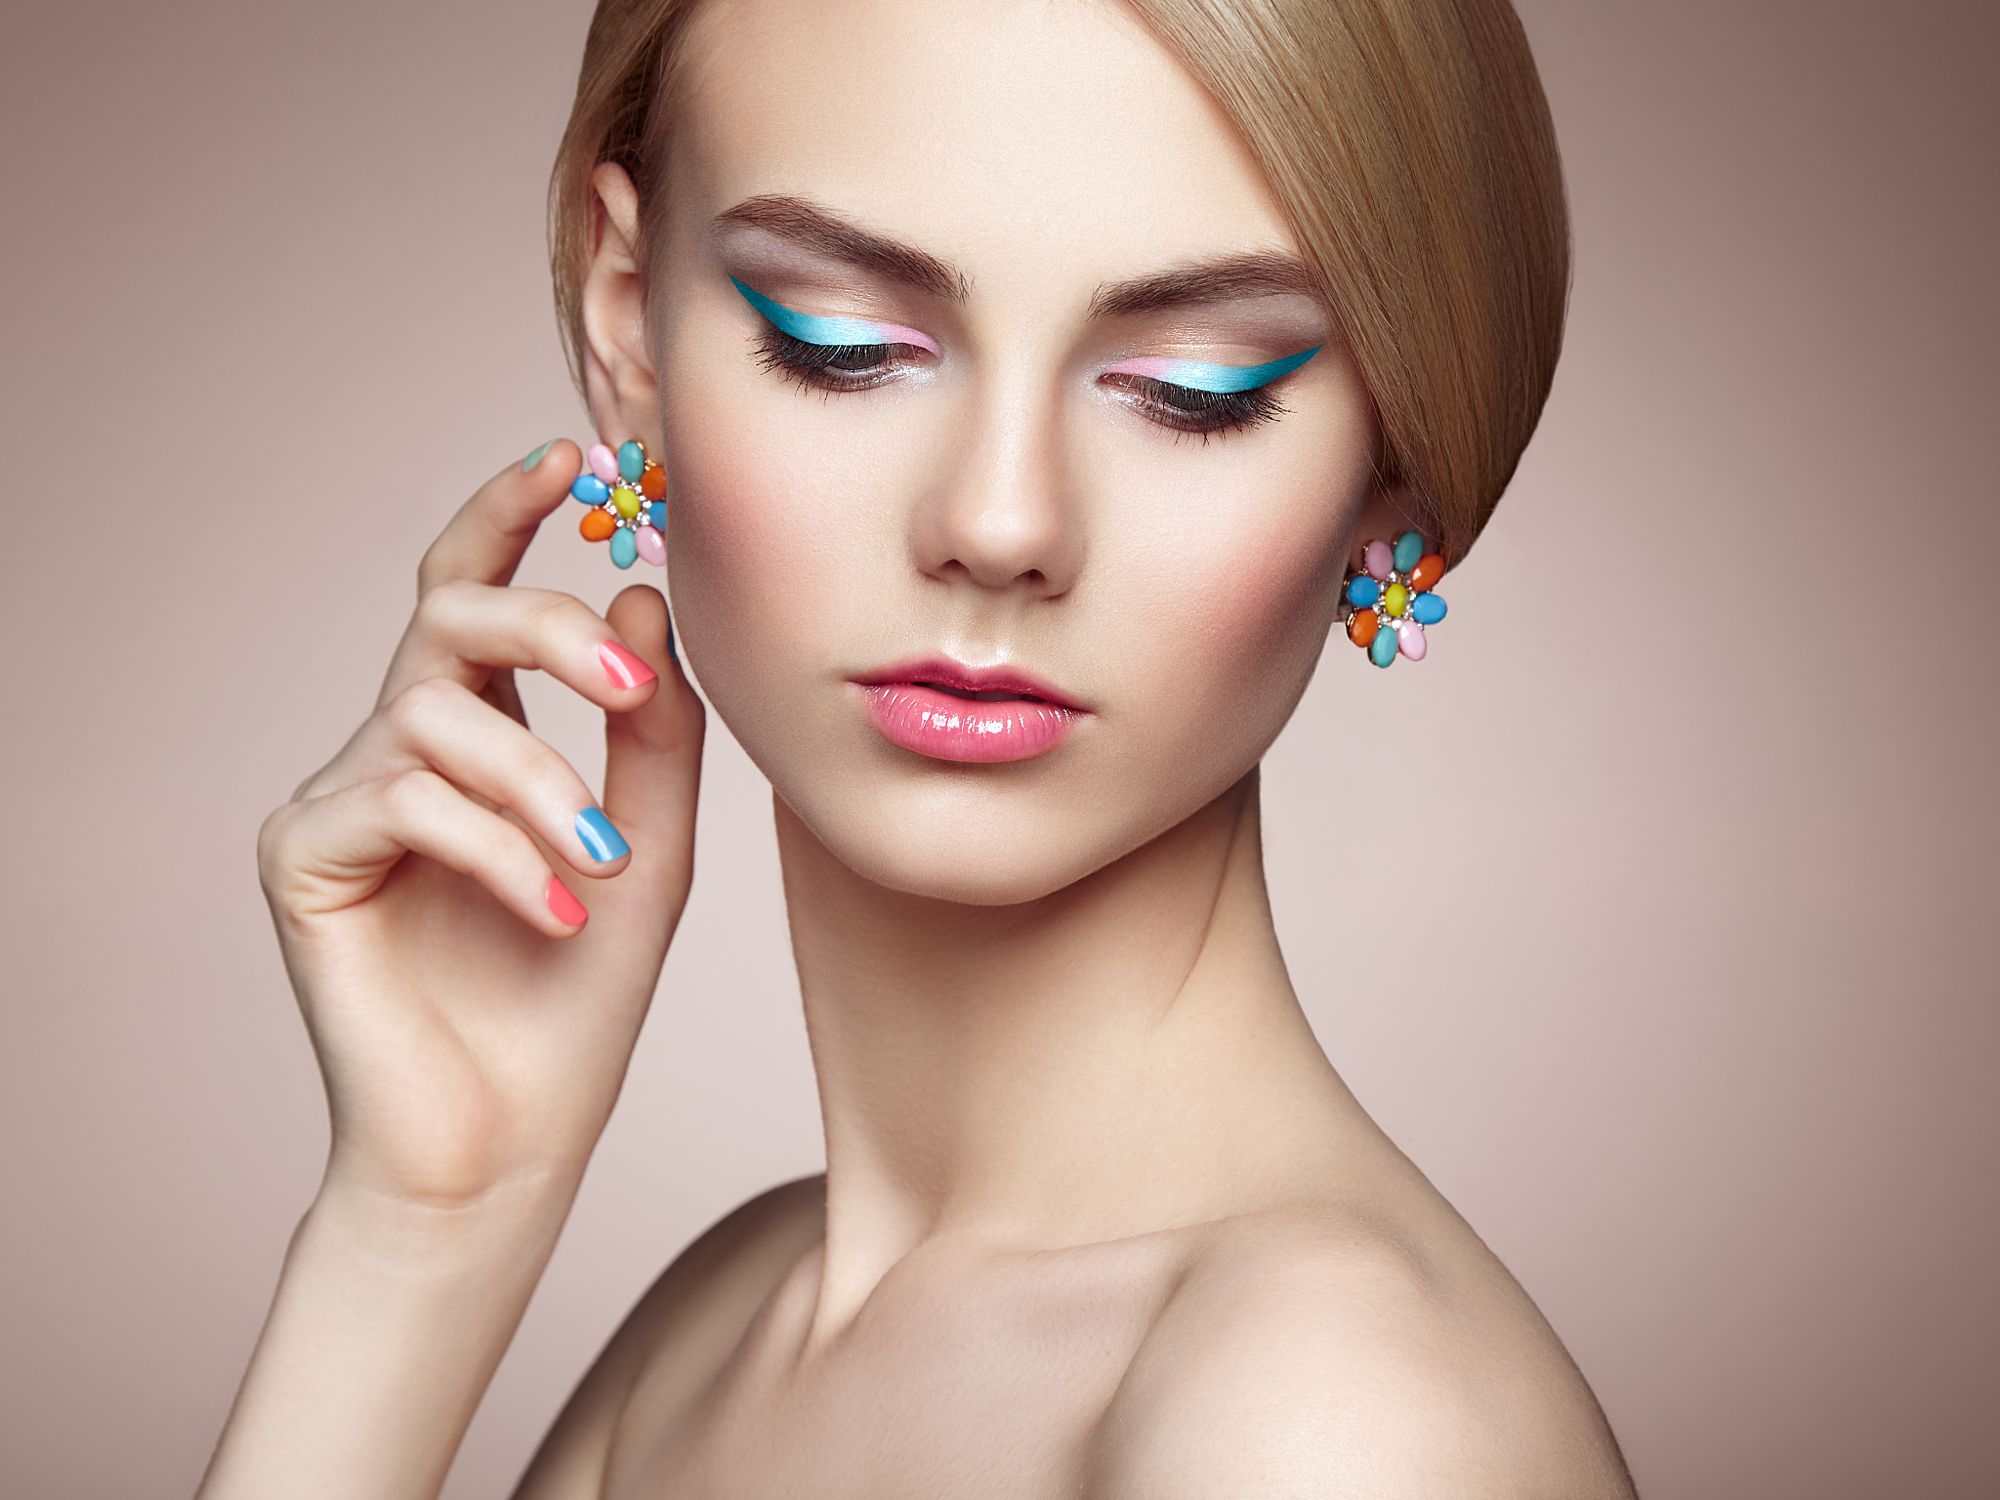 People 2000x1500 Oleg Gekman women blonde hairbun colorful makeup eyeshadow earring painted nails lipstick portrait simple background Anna Nosova face